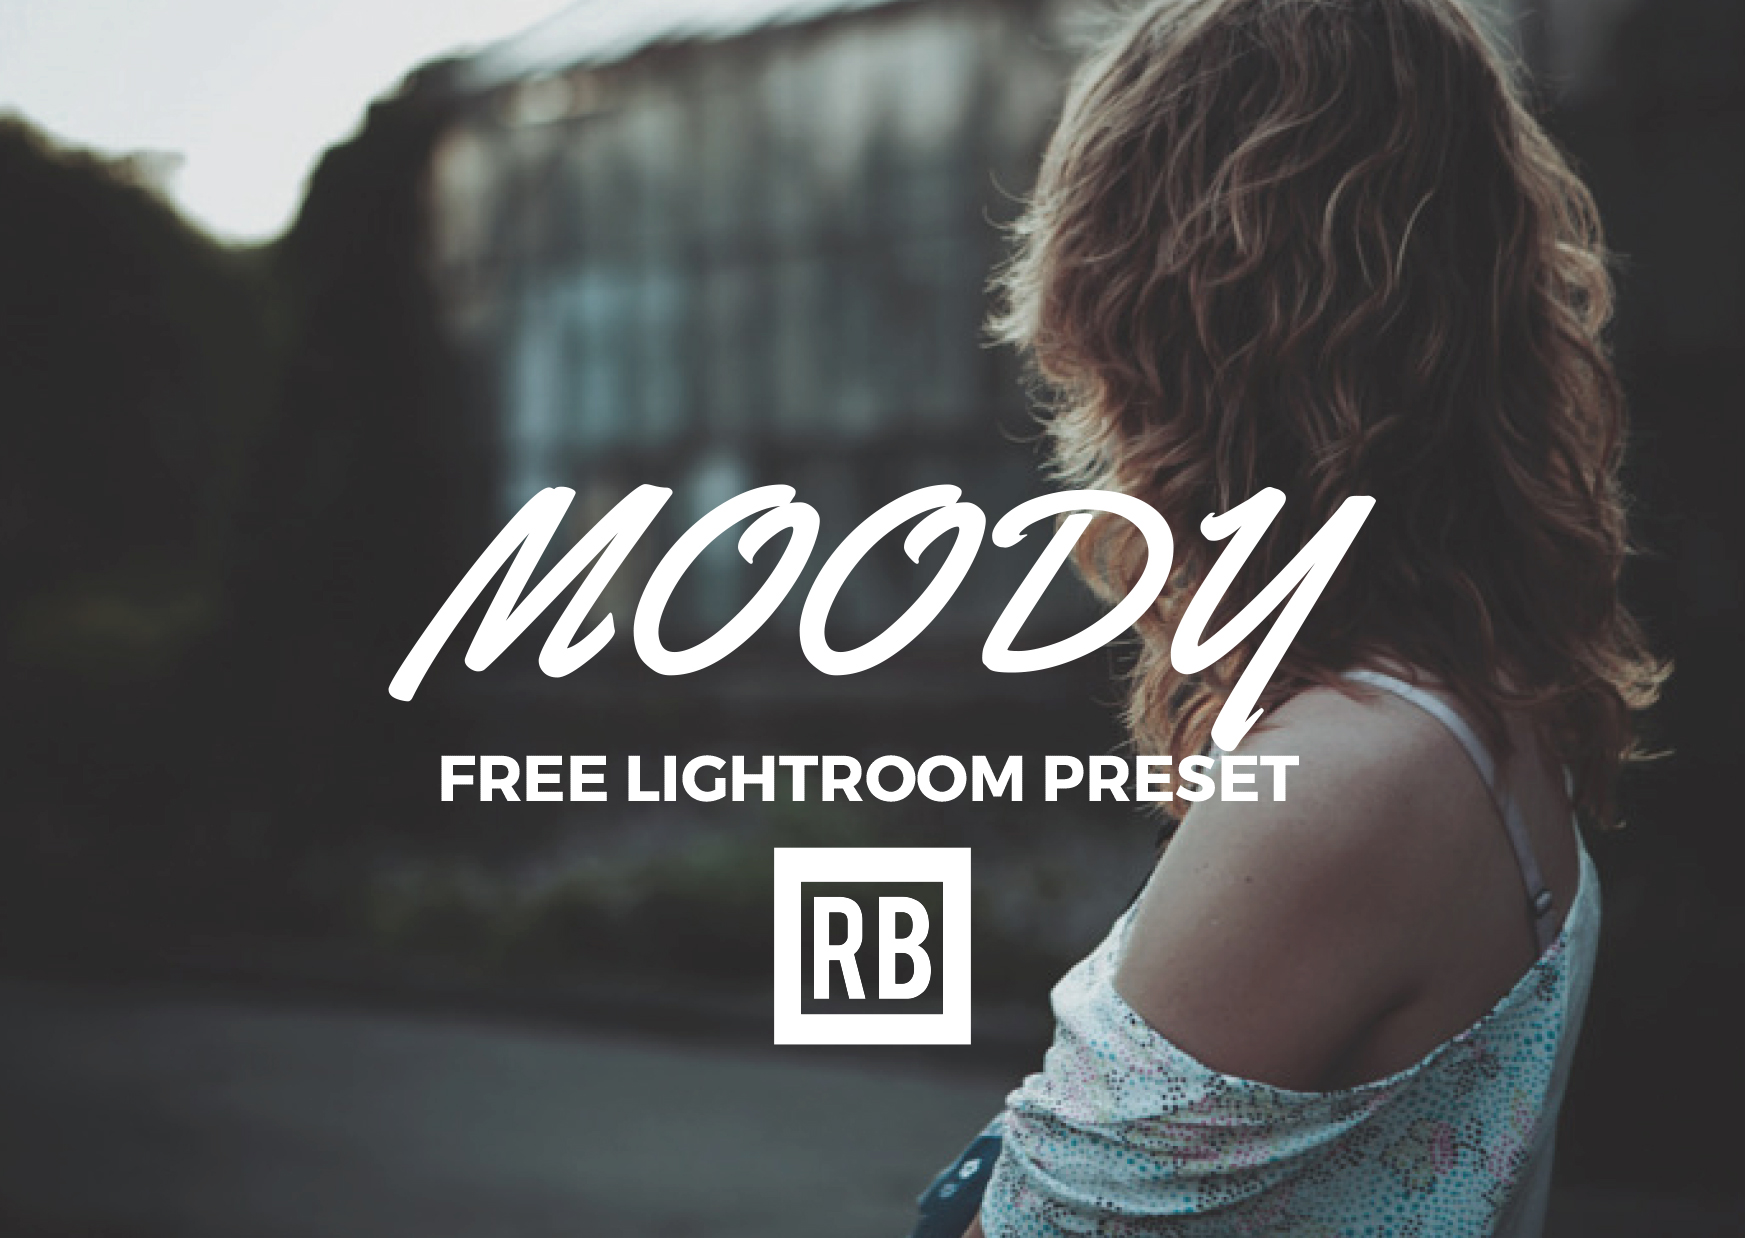 Free Lightroom Preset - Moody